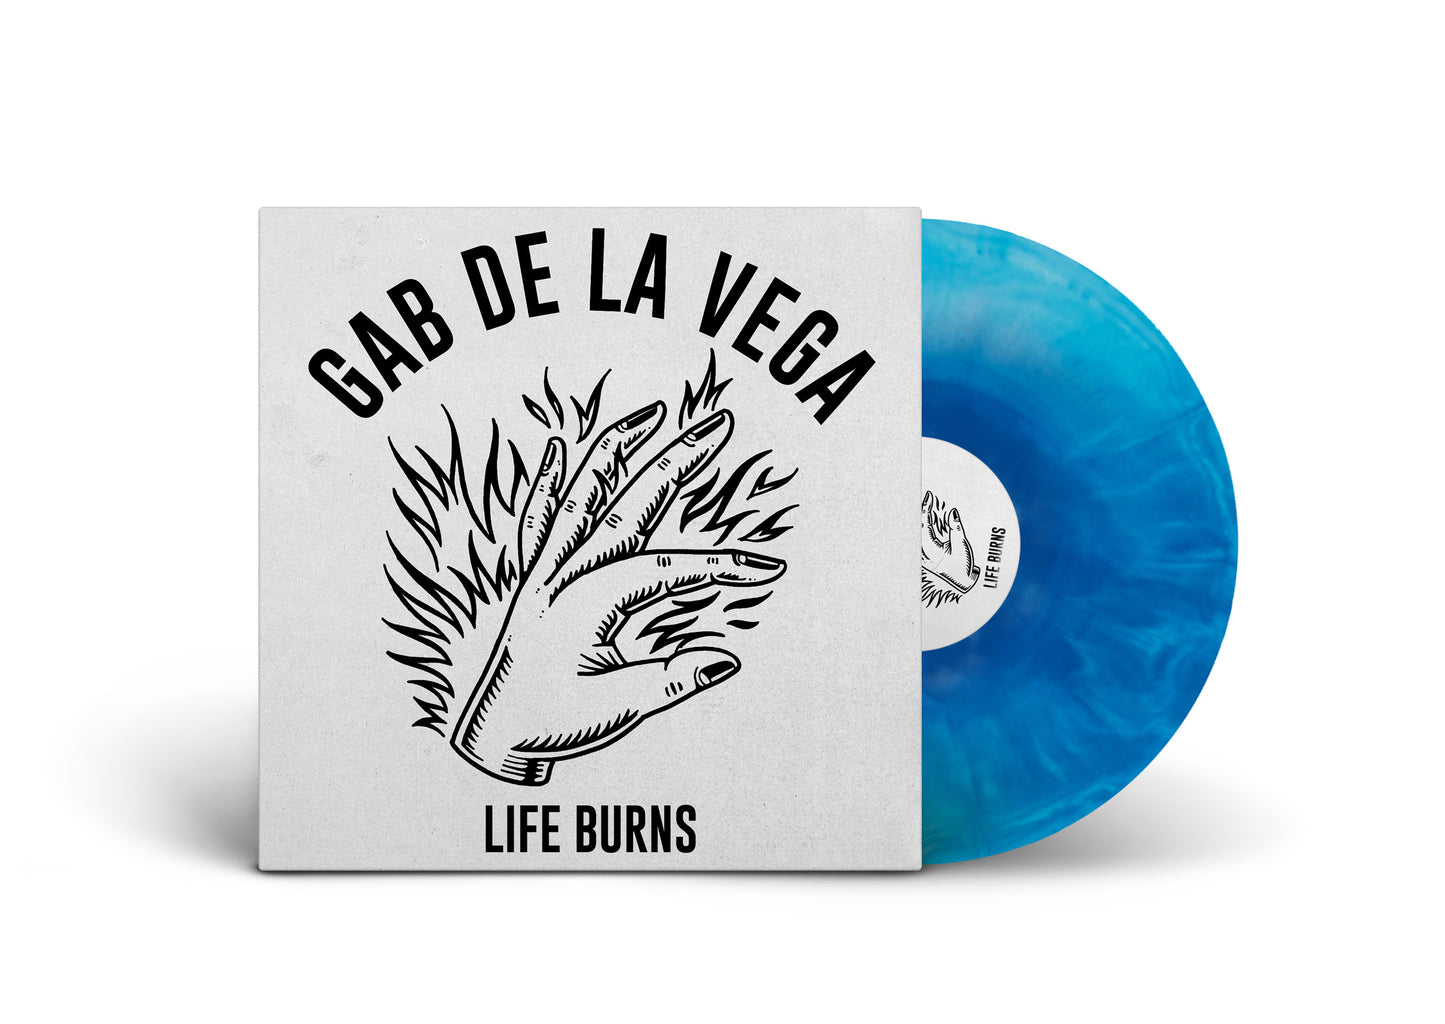 GAB DE LA VEGA - "Life Burns" (SBAM) (LP/CD)